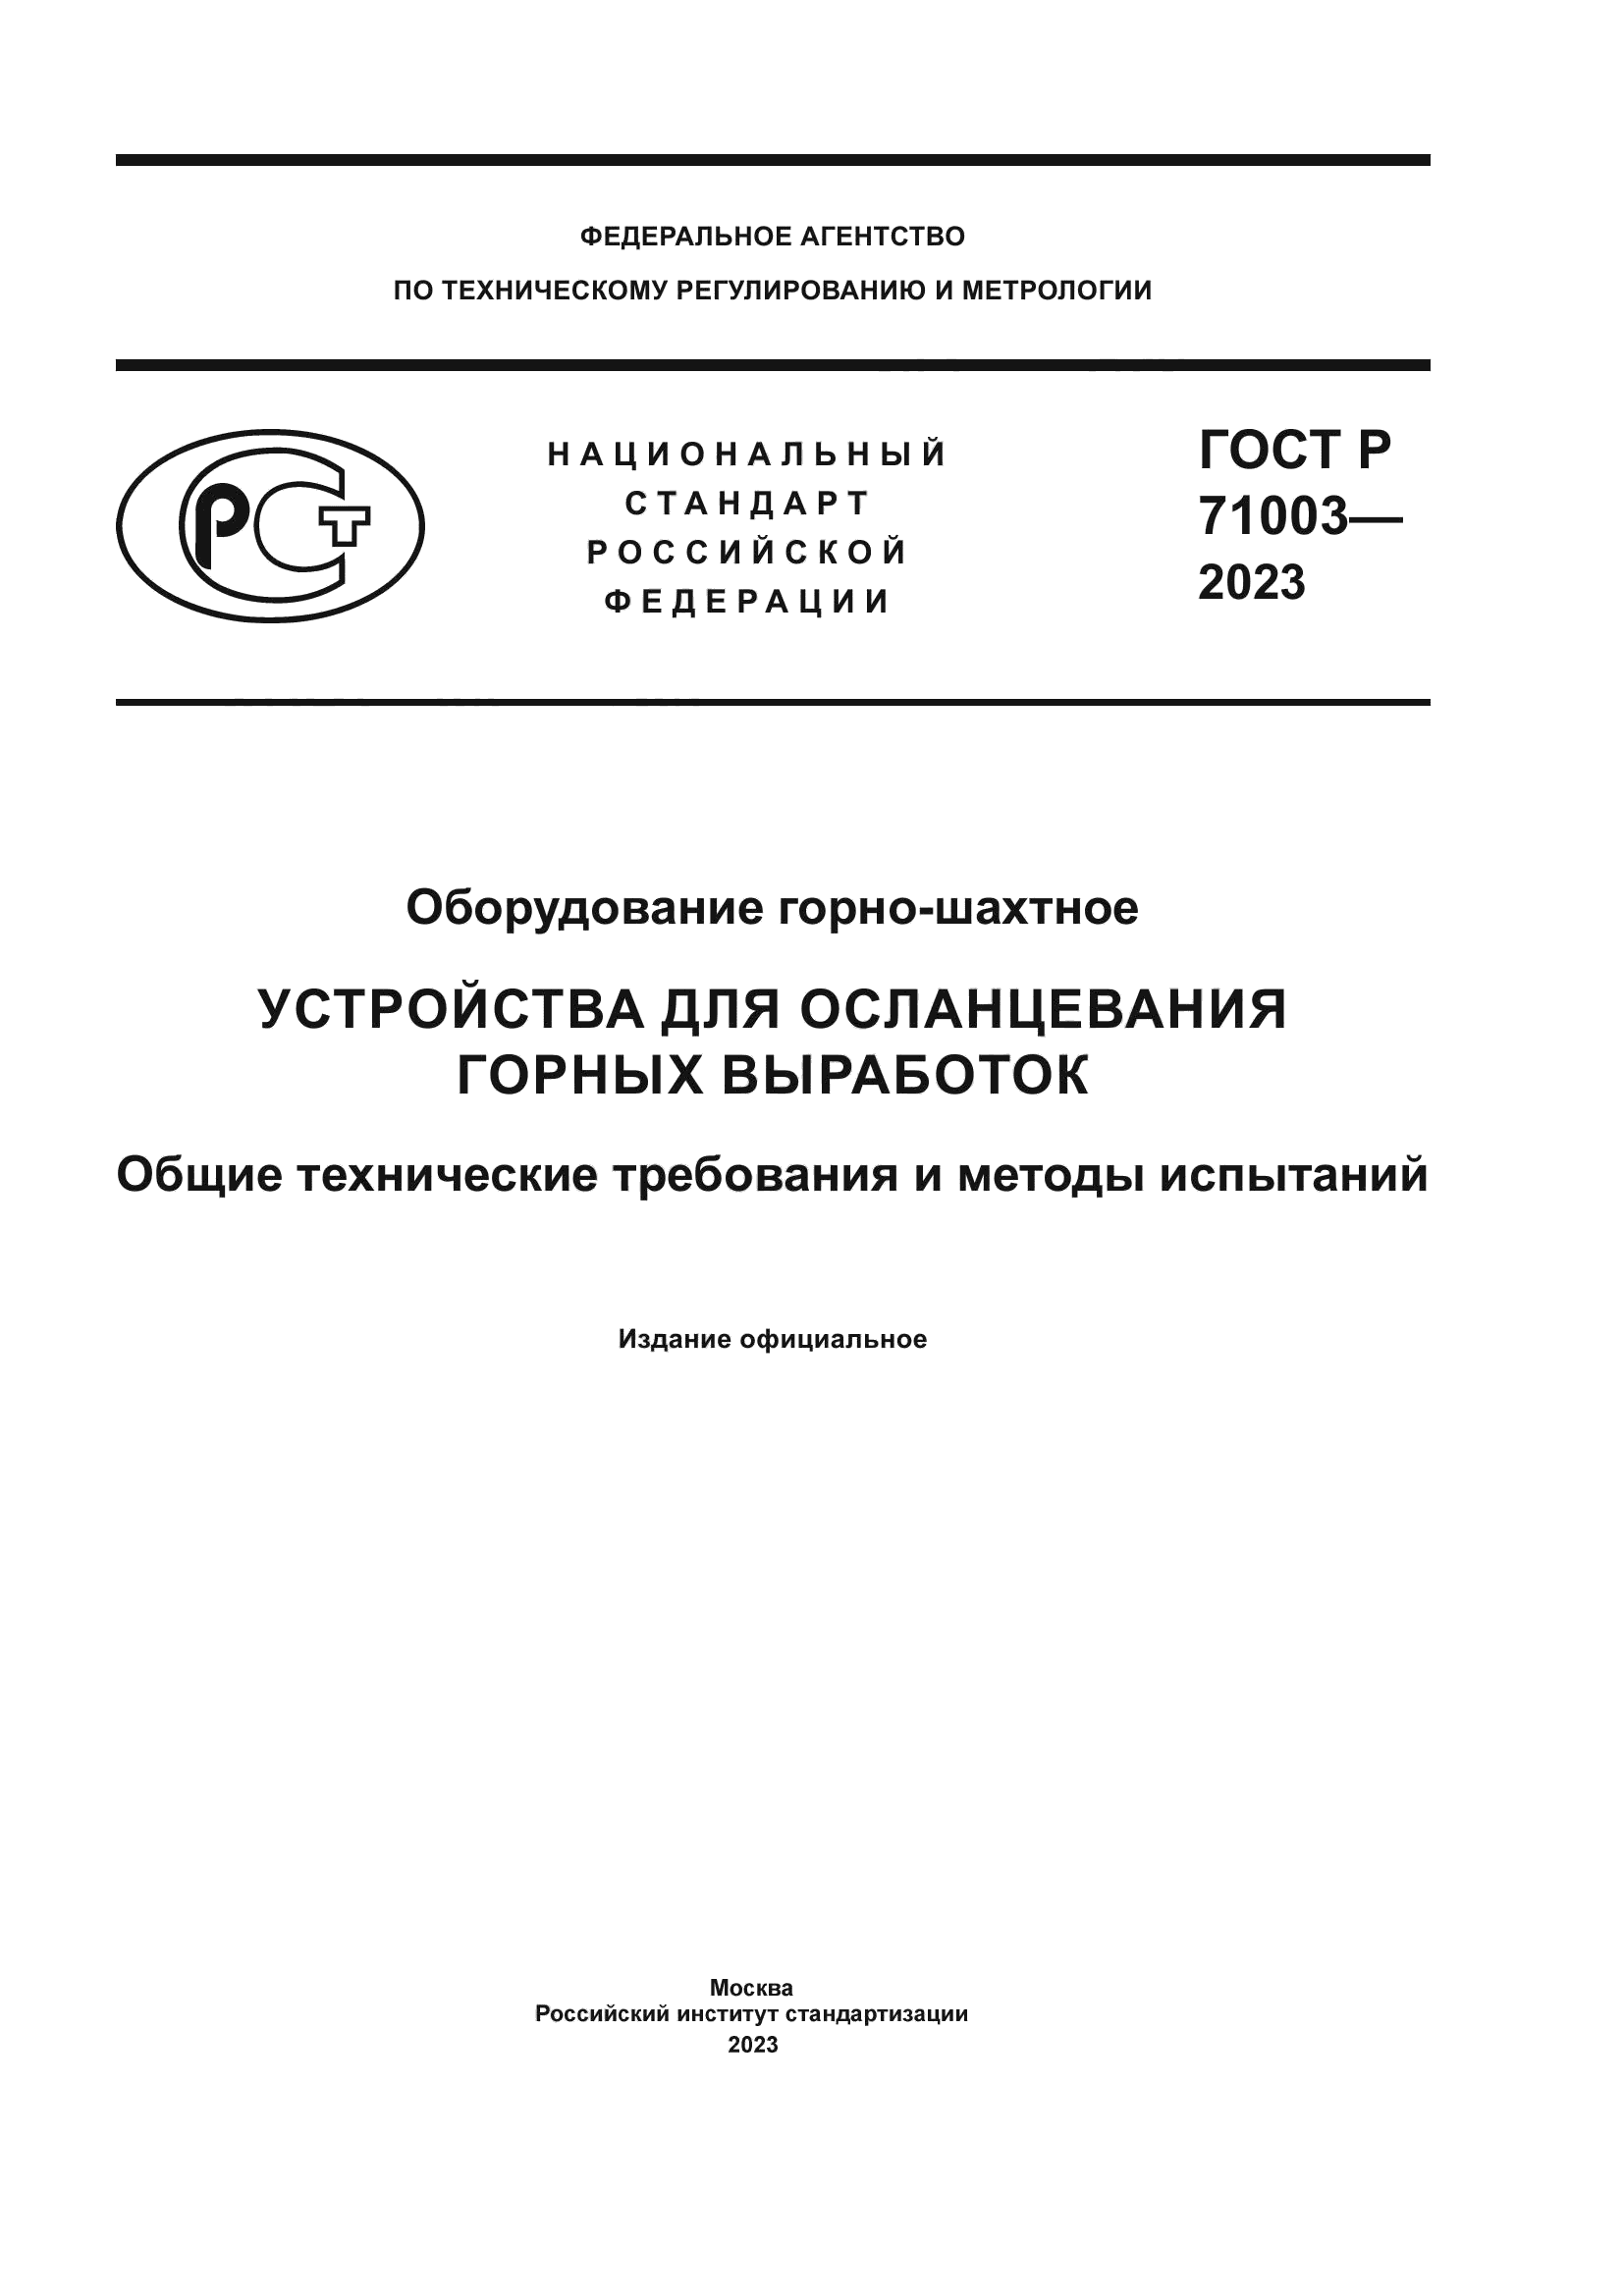 ГОСТ Р 71003-2023